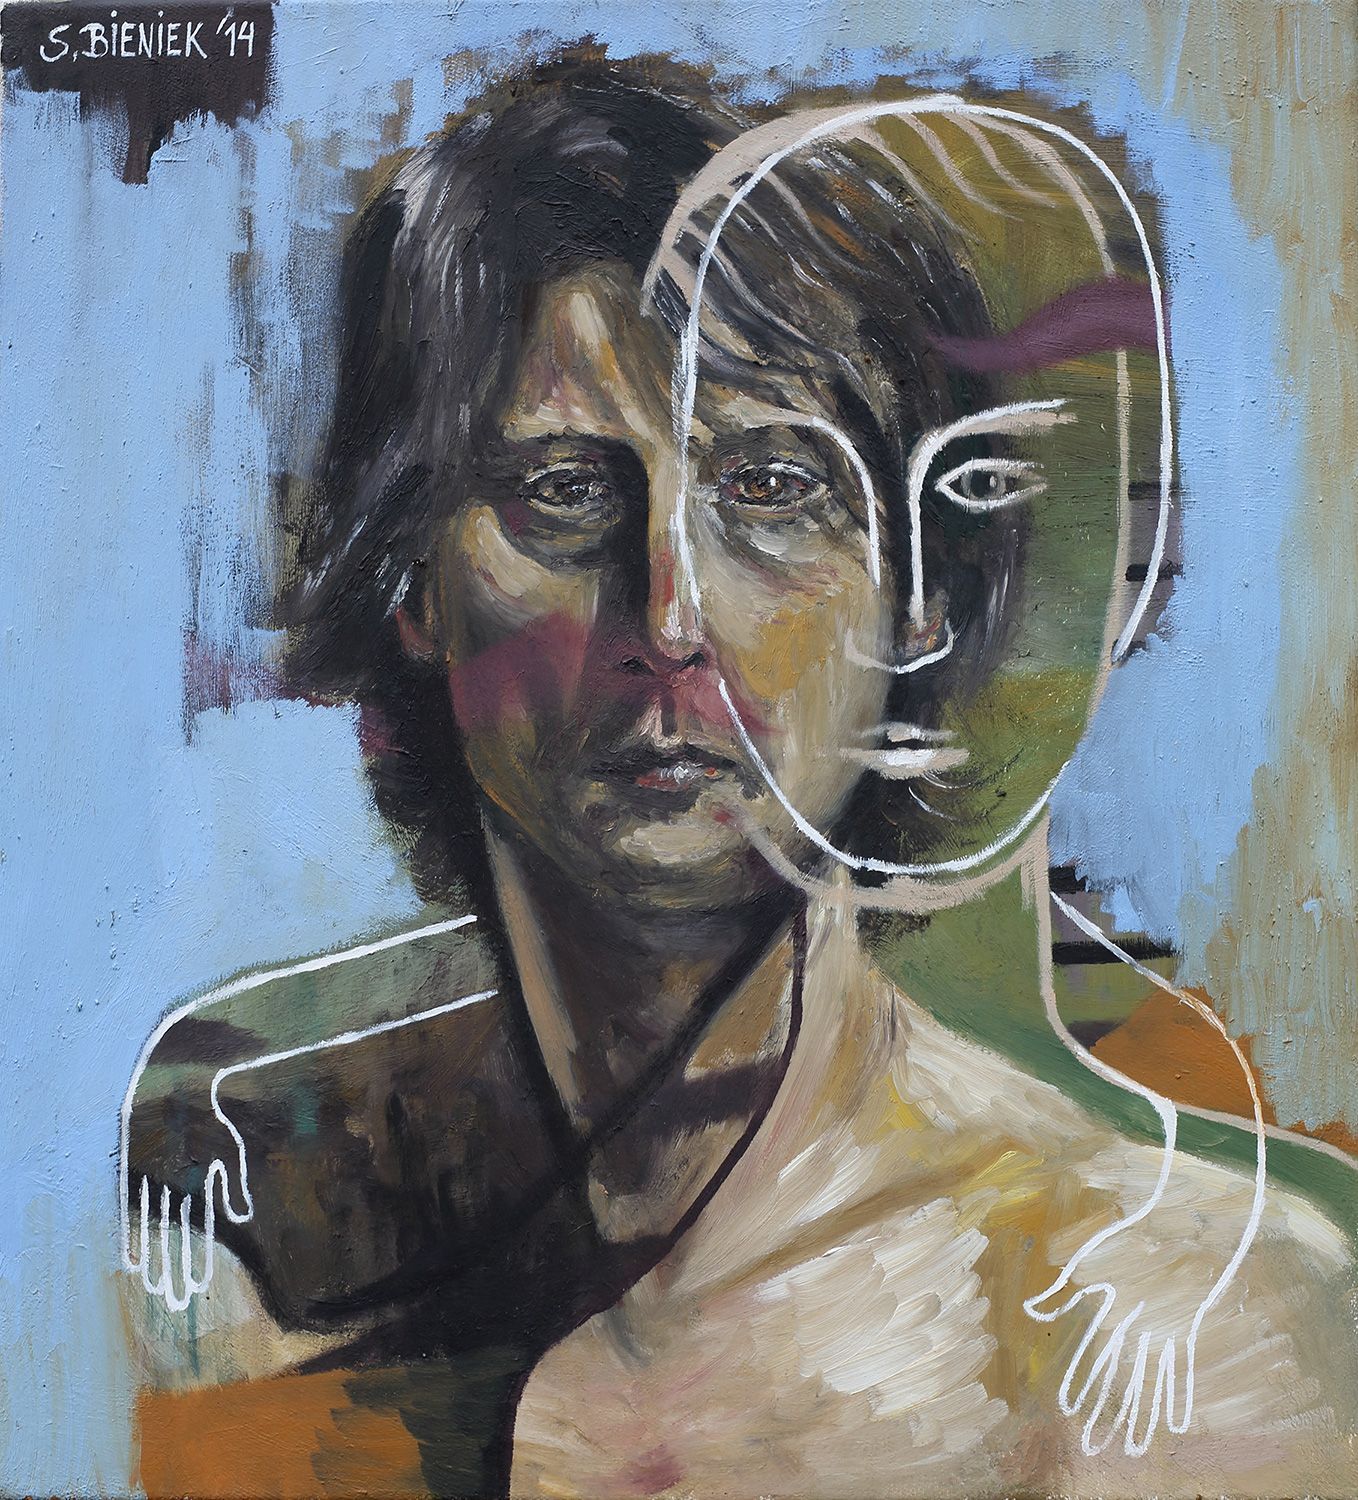 „Two-Faced No. 6“ by Sebastian Bieniek (B1EN1EK), 2014, self-portrait by the artist. Oil on canvas, 55 cm. x 50 cm. From the oeuvre of BieniekFace painting.